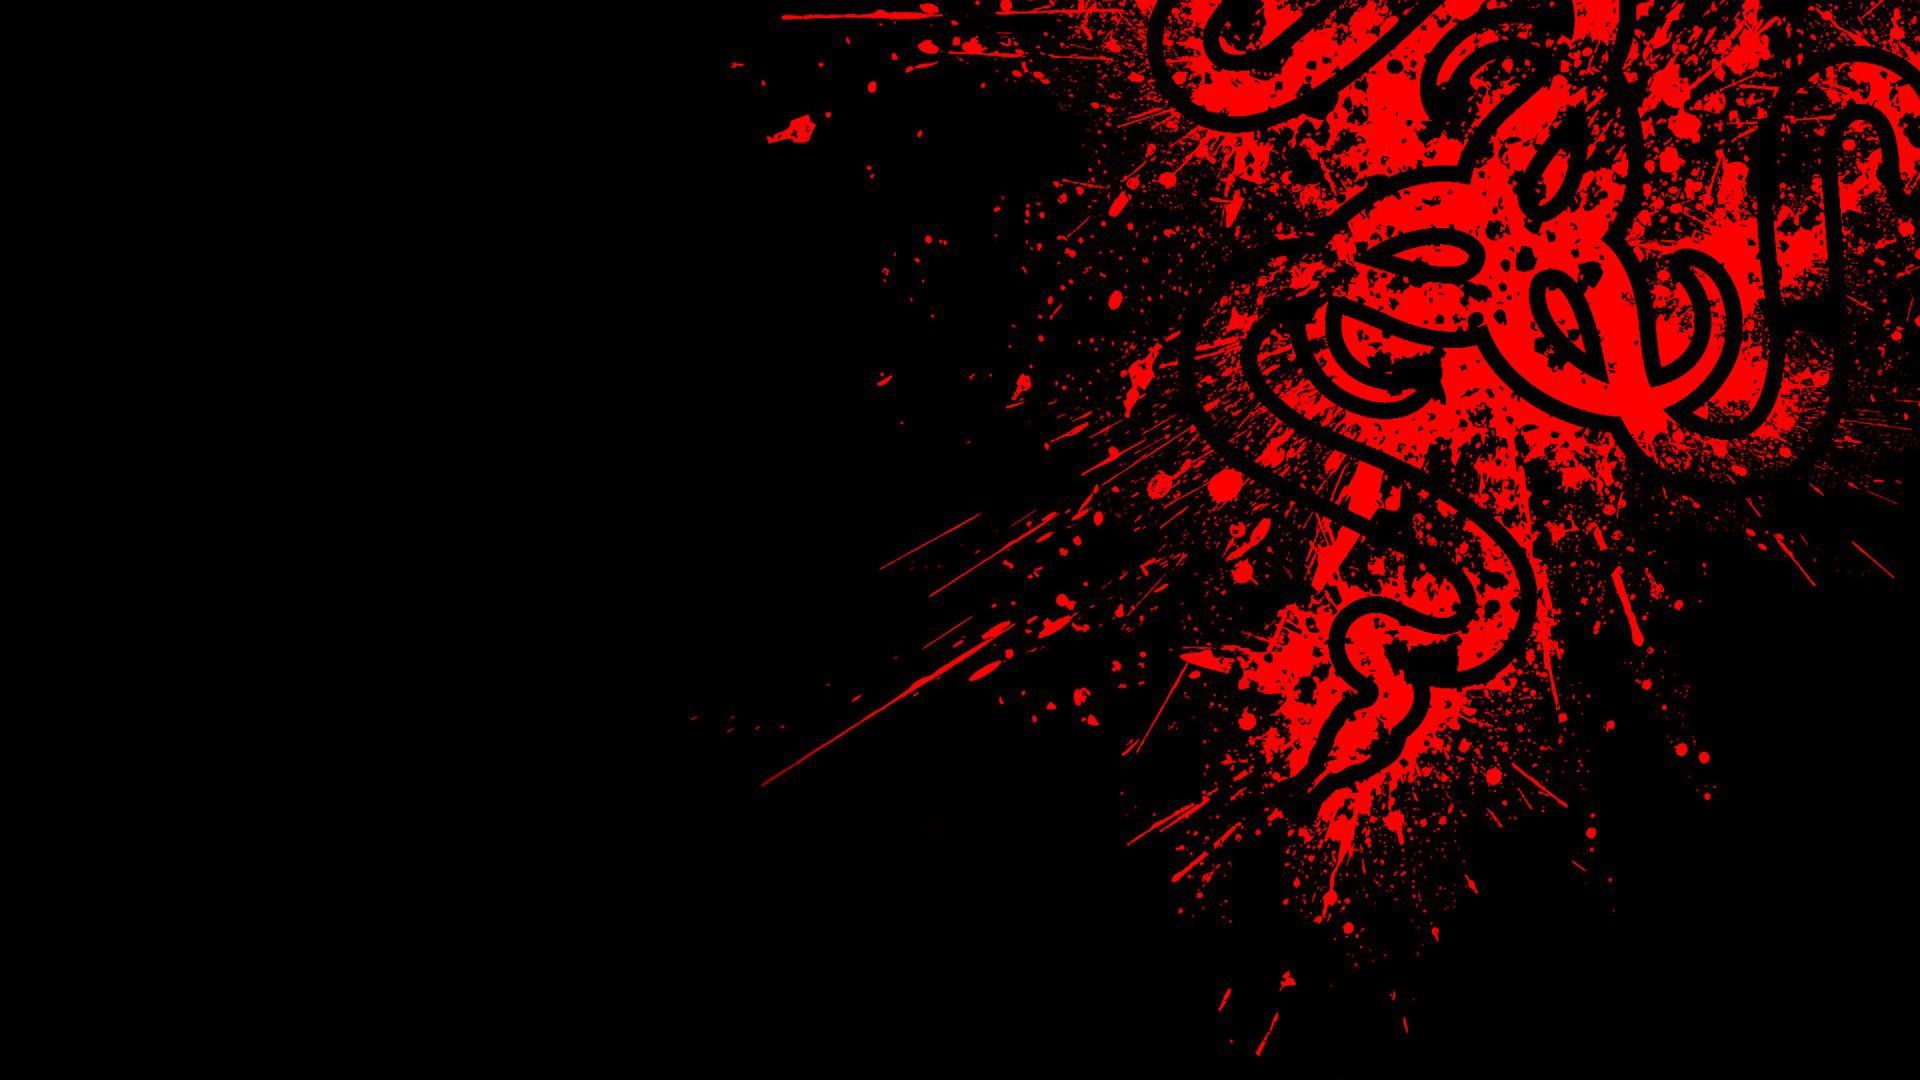 Red 1080p Wallpaper, 41 Red 1080p Computer Wallpaper. Black skulls wallpaper, Skull wallpaper, Gaming wallpaper